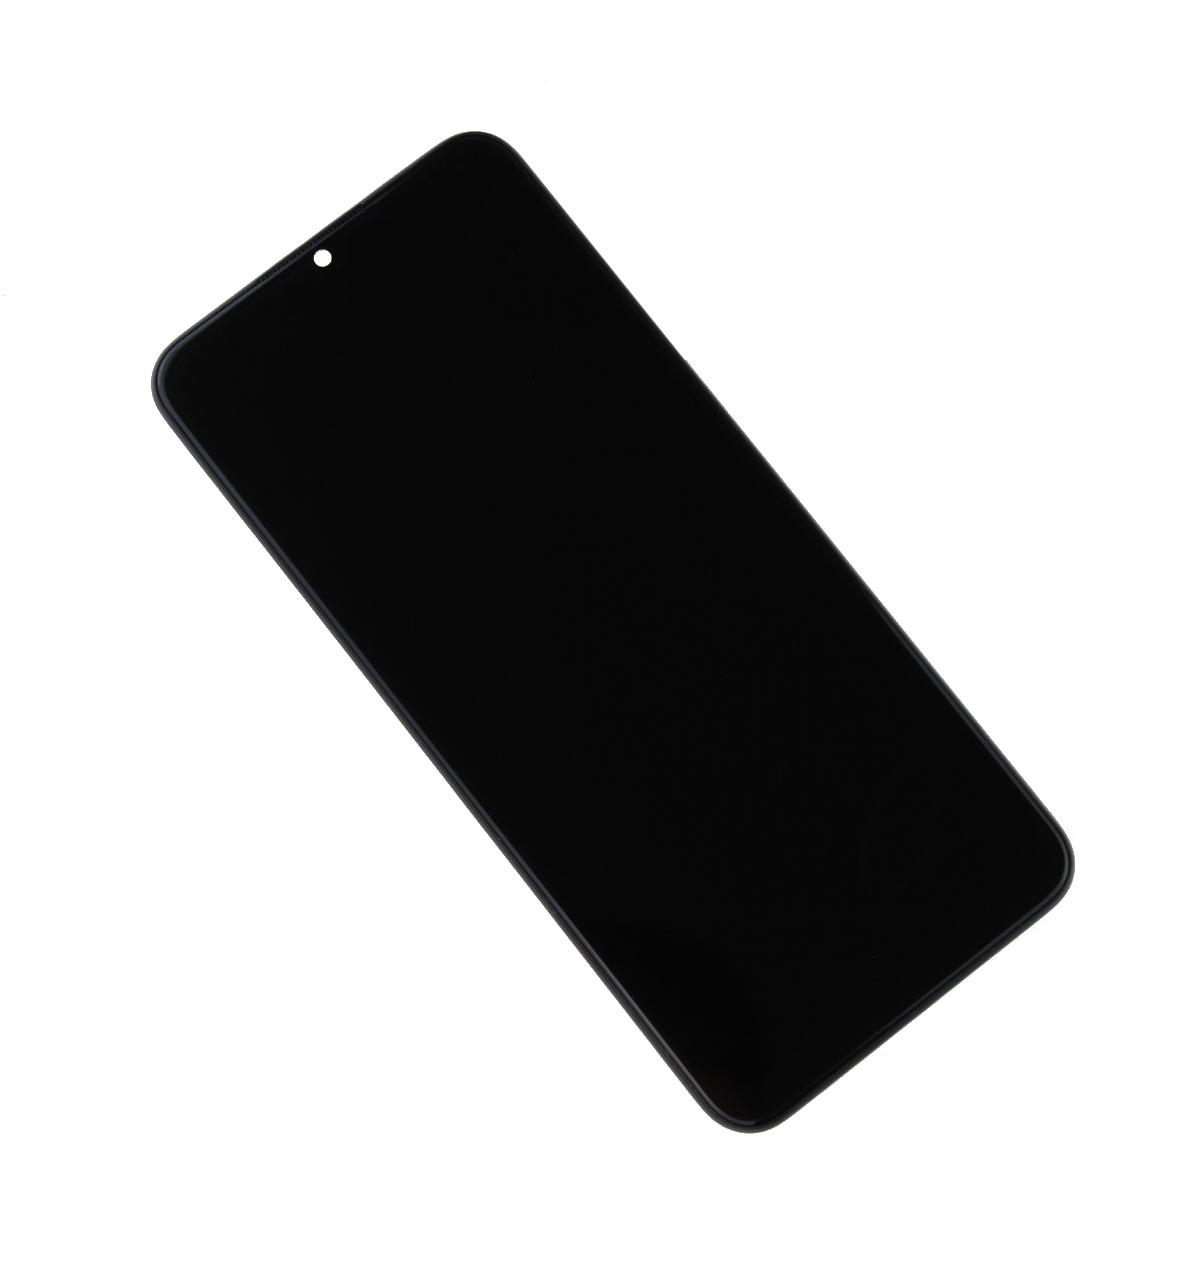 Originál LCD + Dotyková vrstva Realme 7i RMX2193 černá - repasovaný díl vyměněné sklíčko